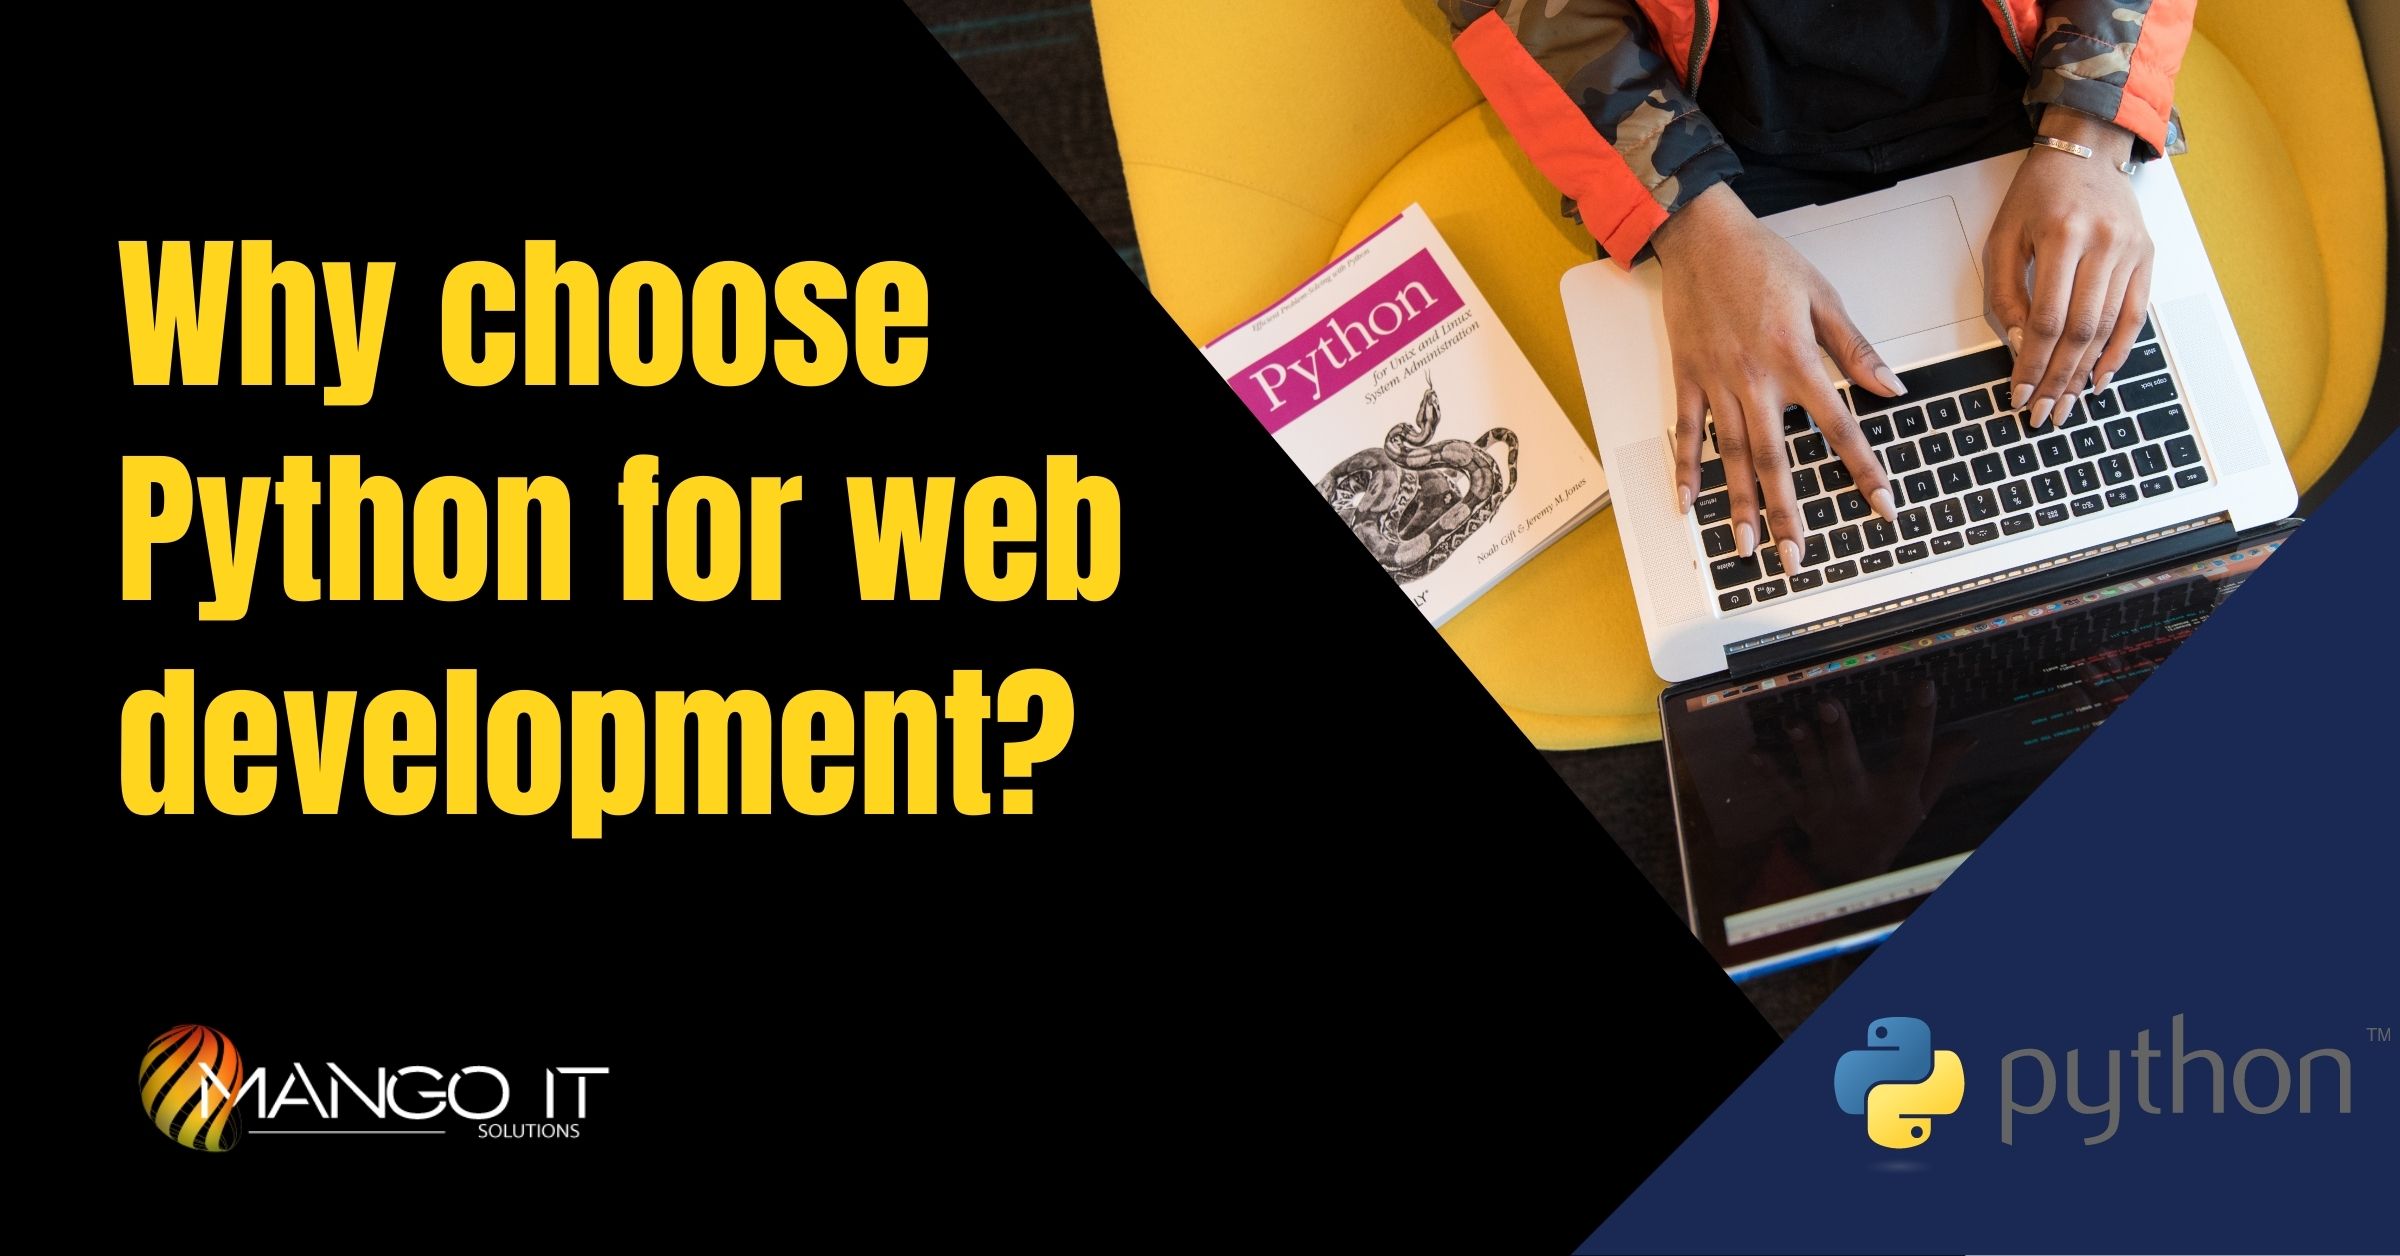 Why choose Python for web development